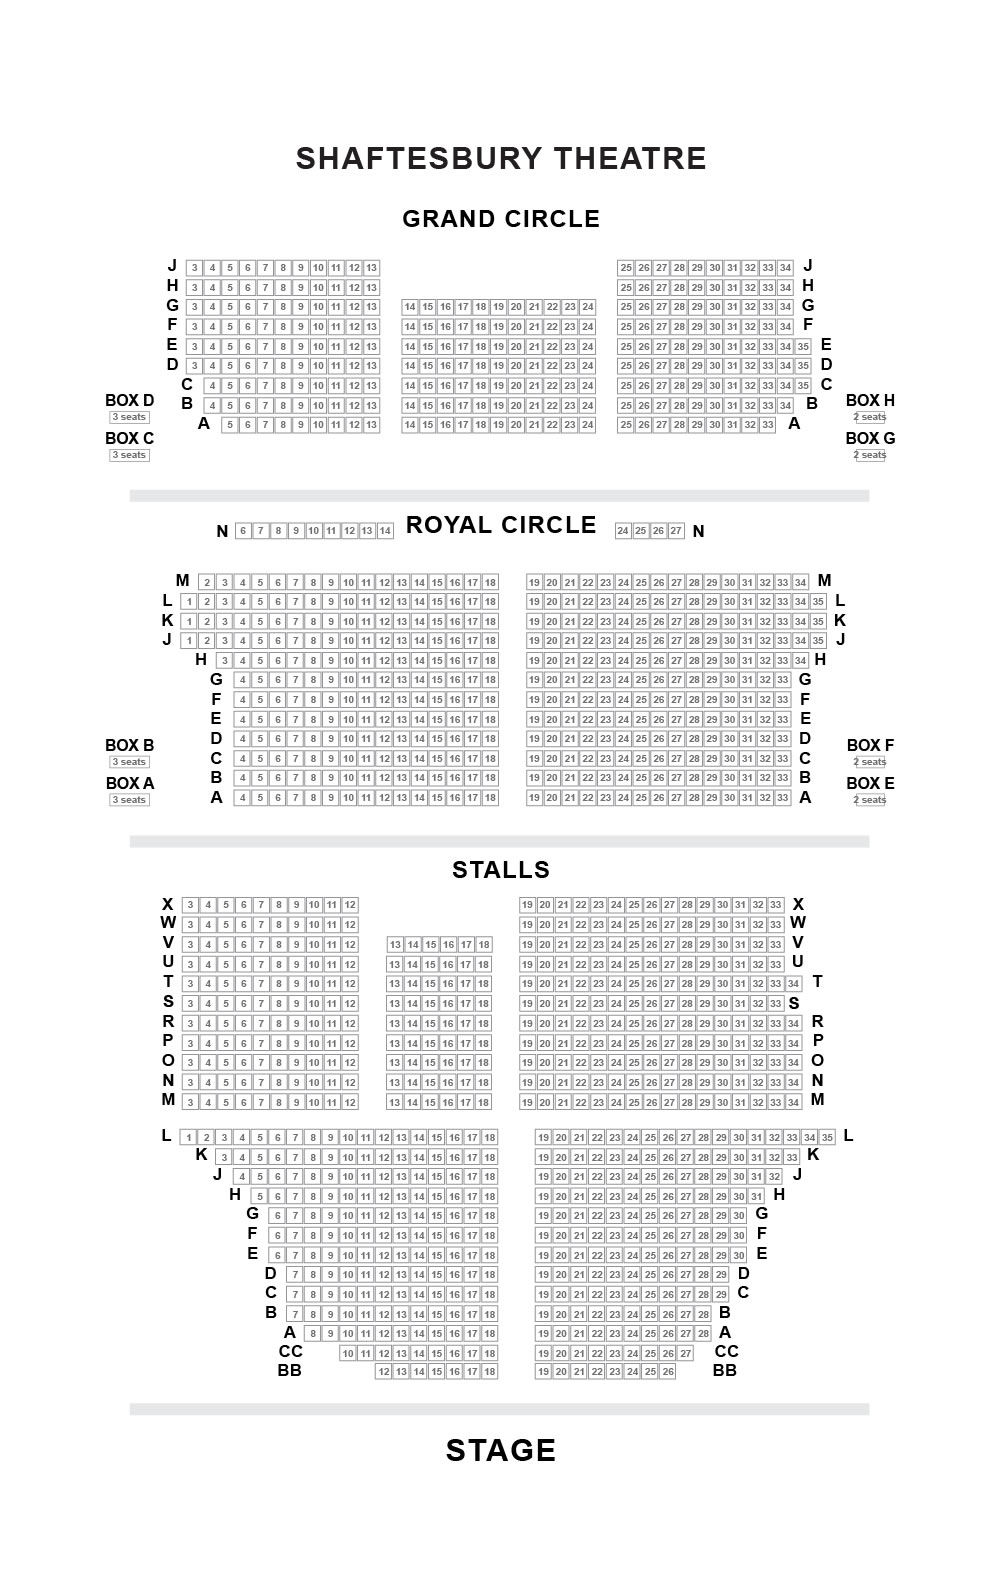 Shaftesbury Theatre seating plan